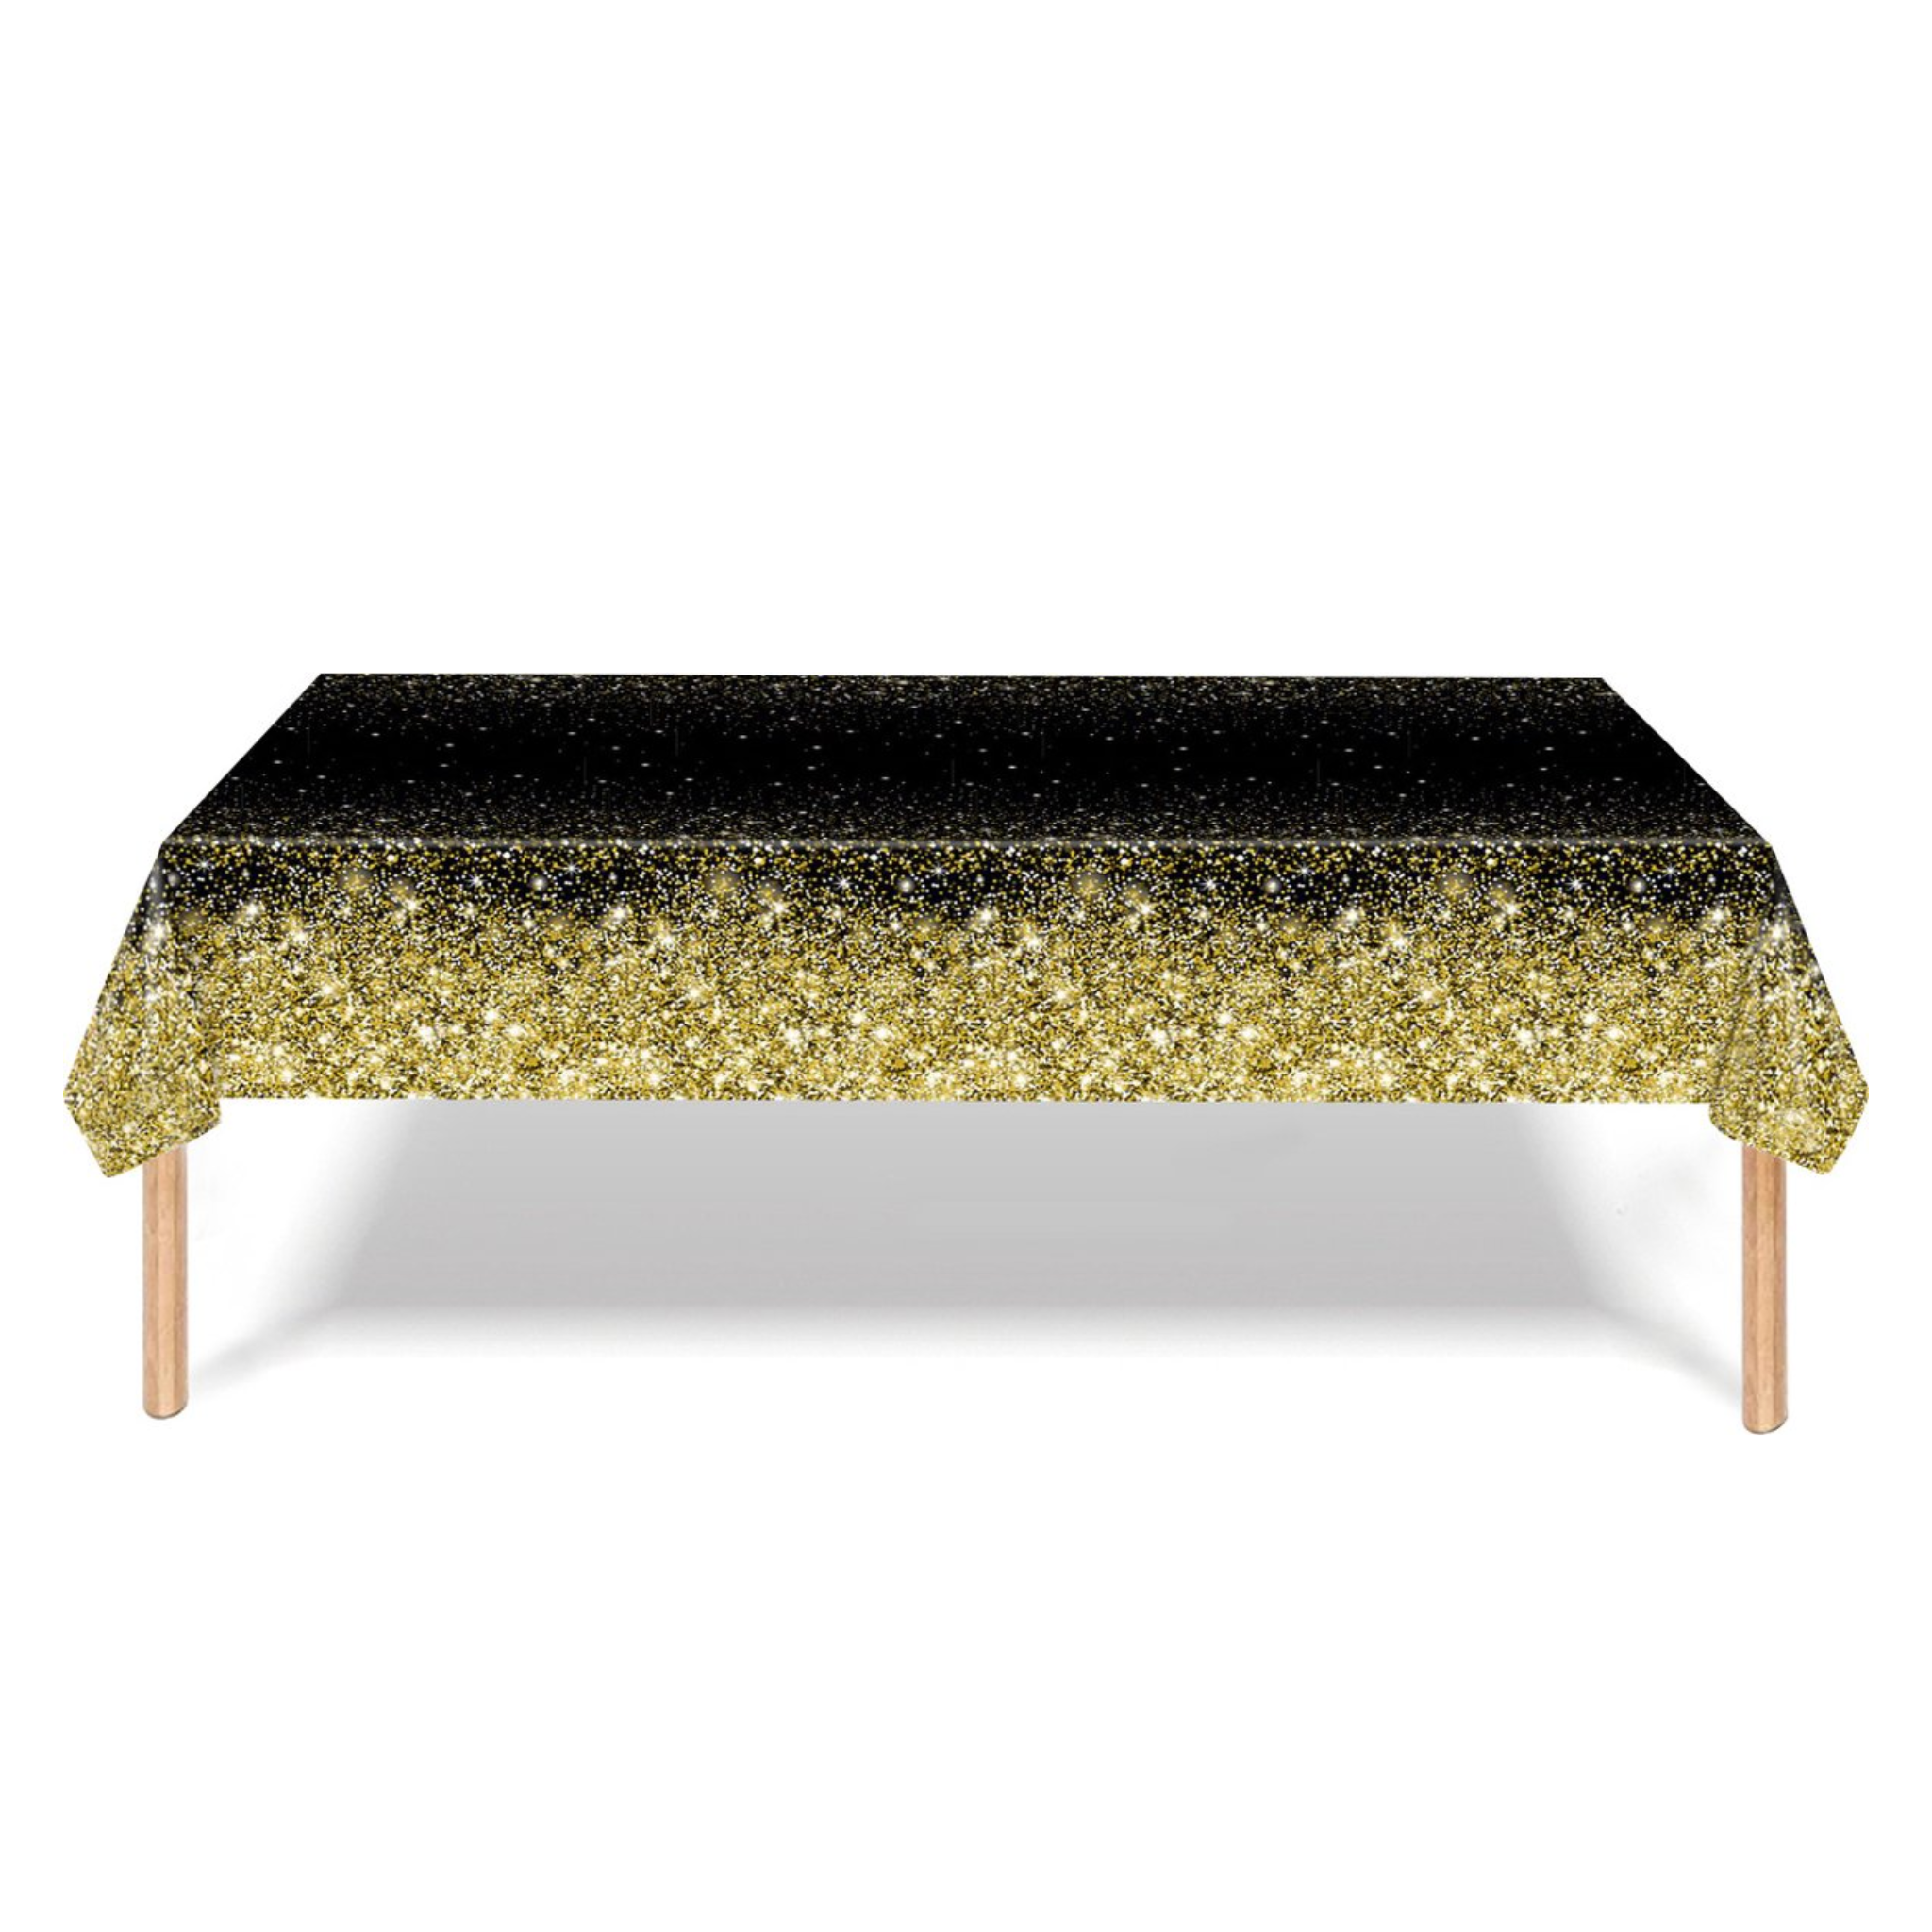 Black & Gold Glitter Tablecloth